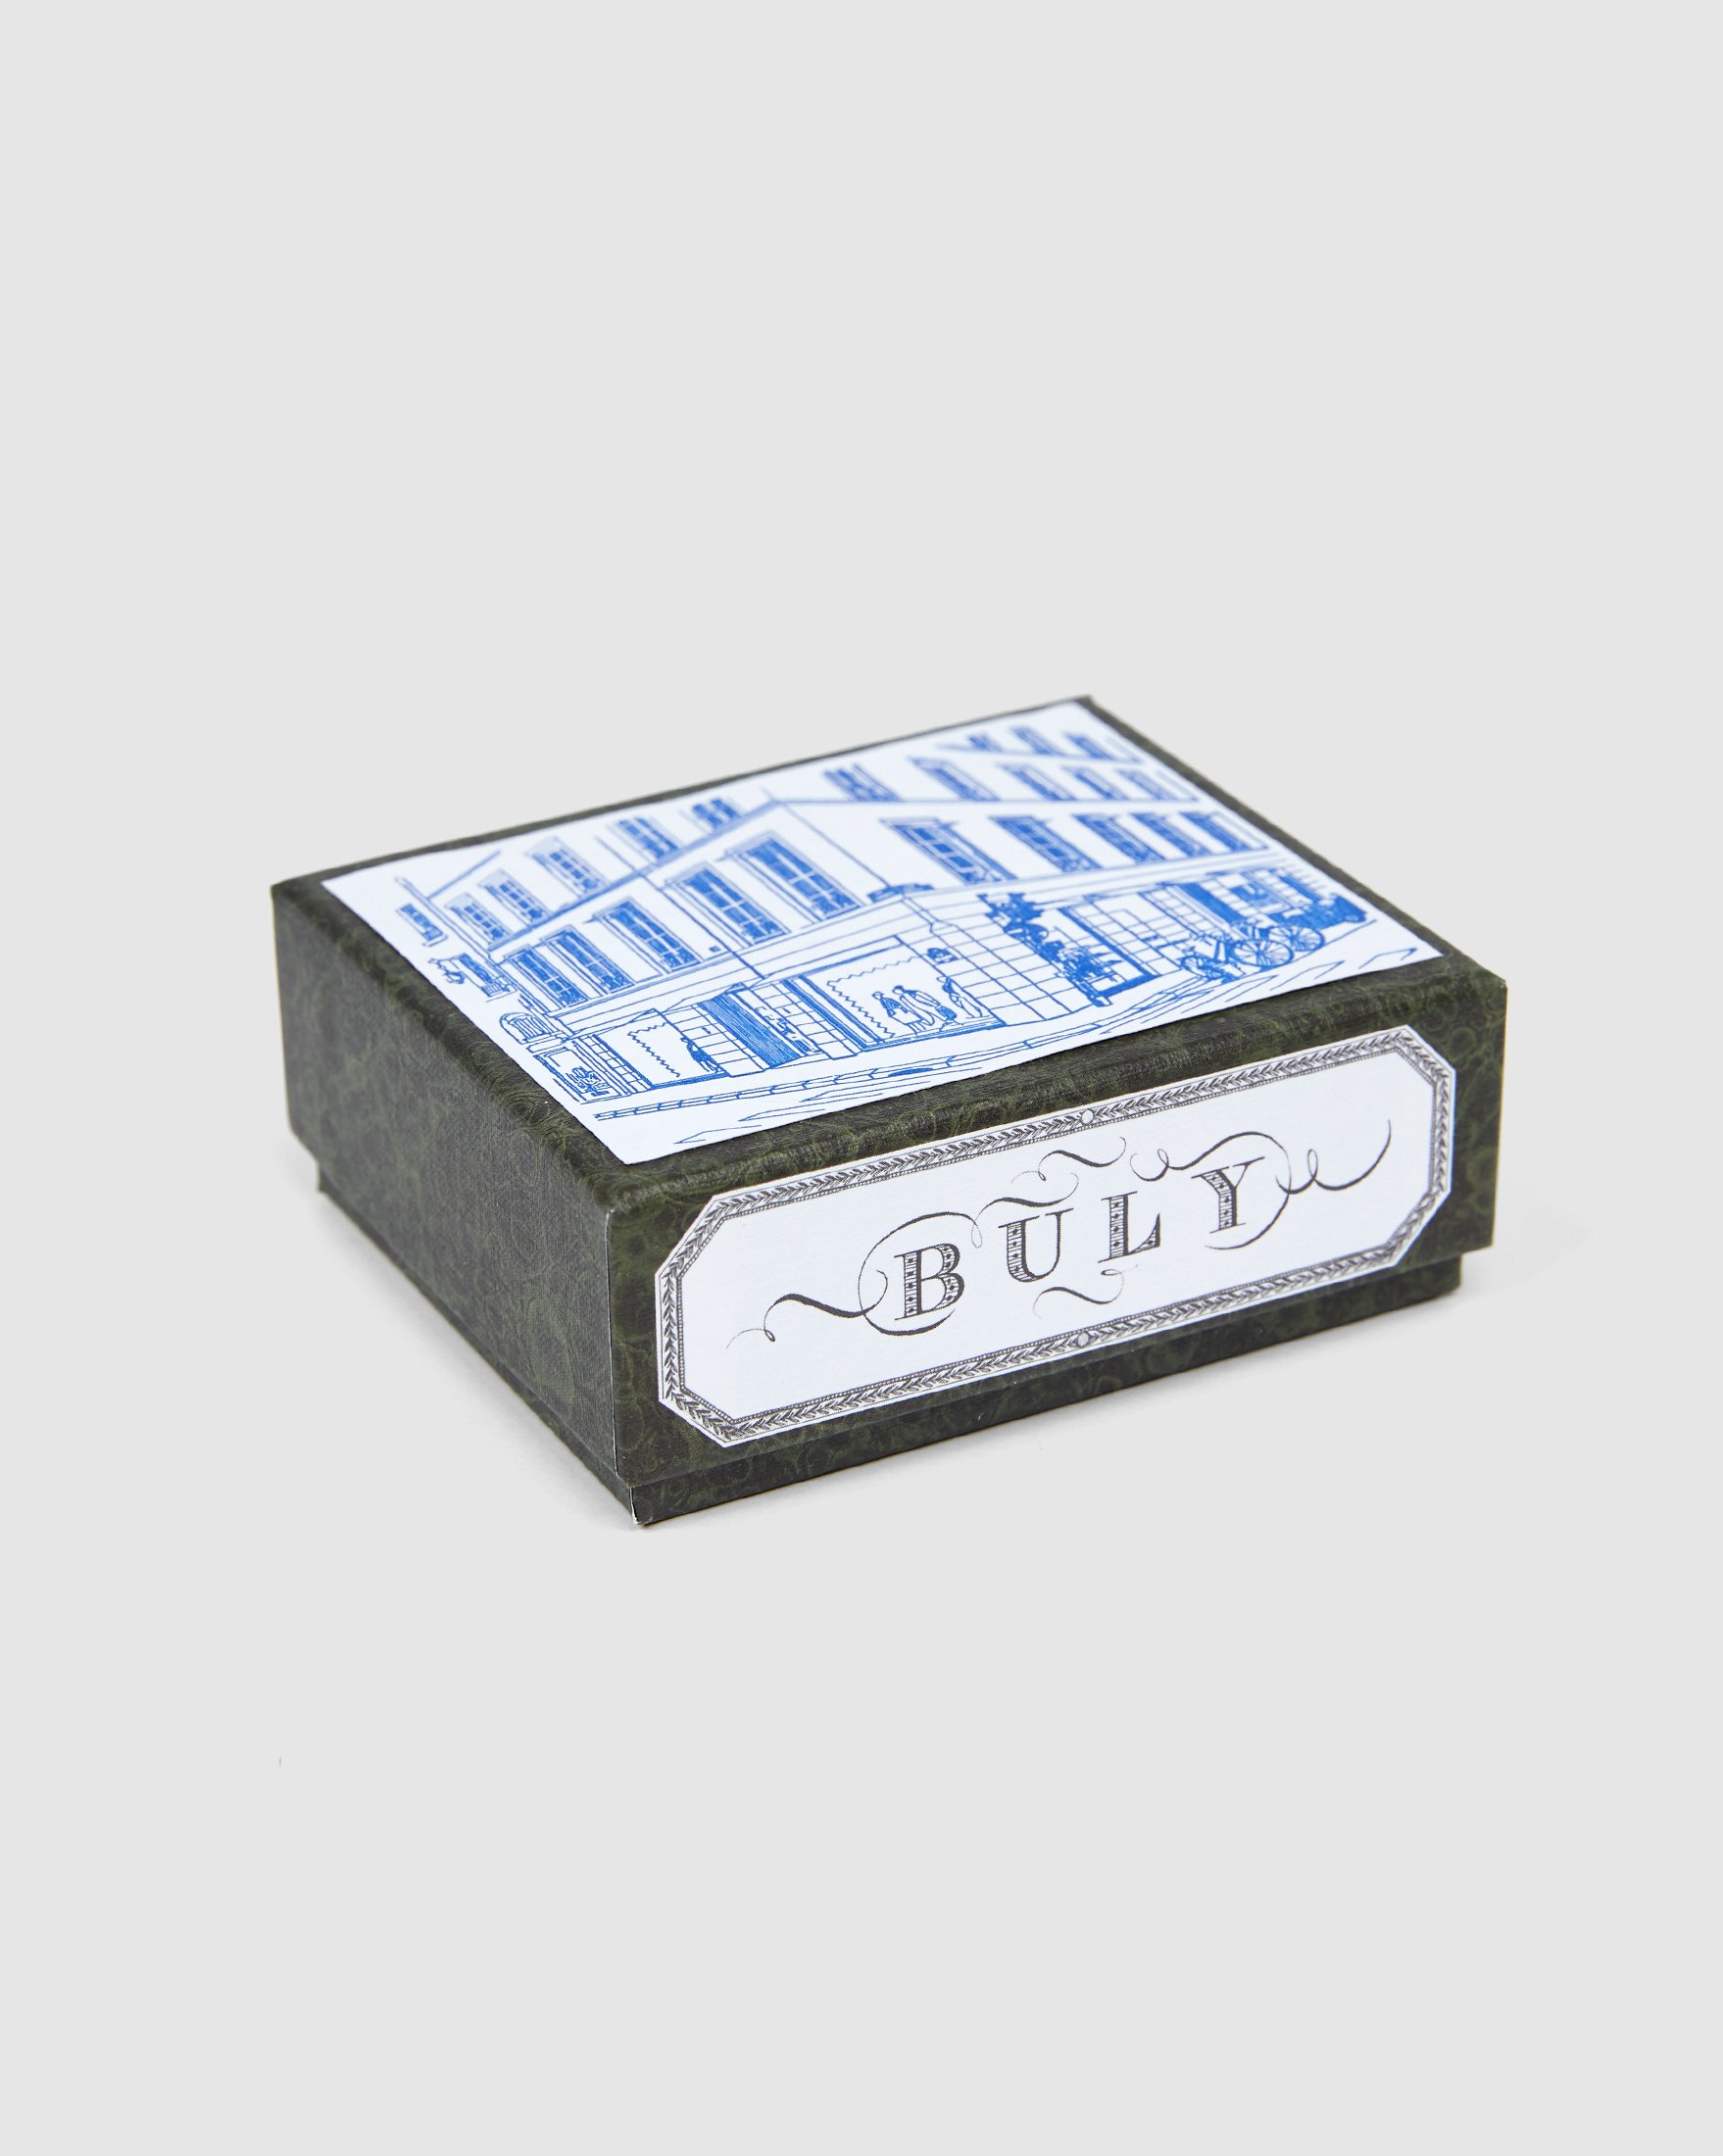 Colette Mon Amour – Officine Universelle Buly Soap | Highsnobiety Shop